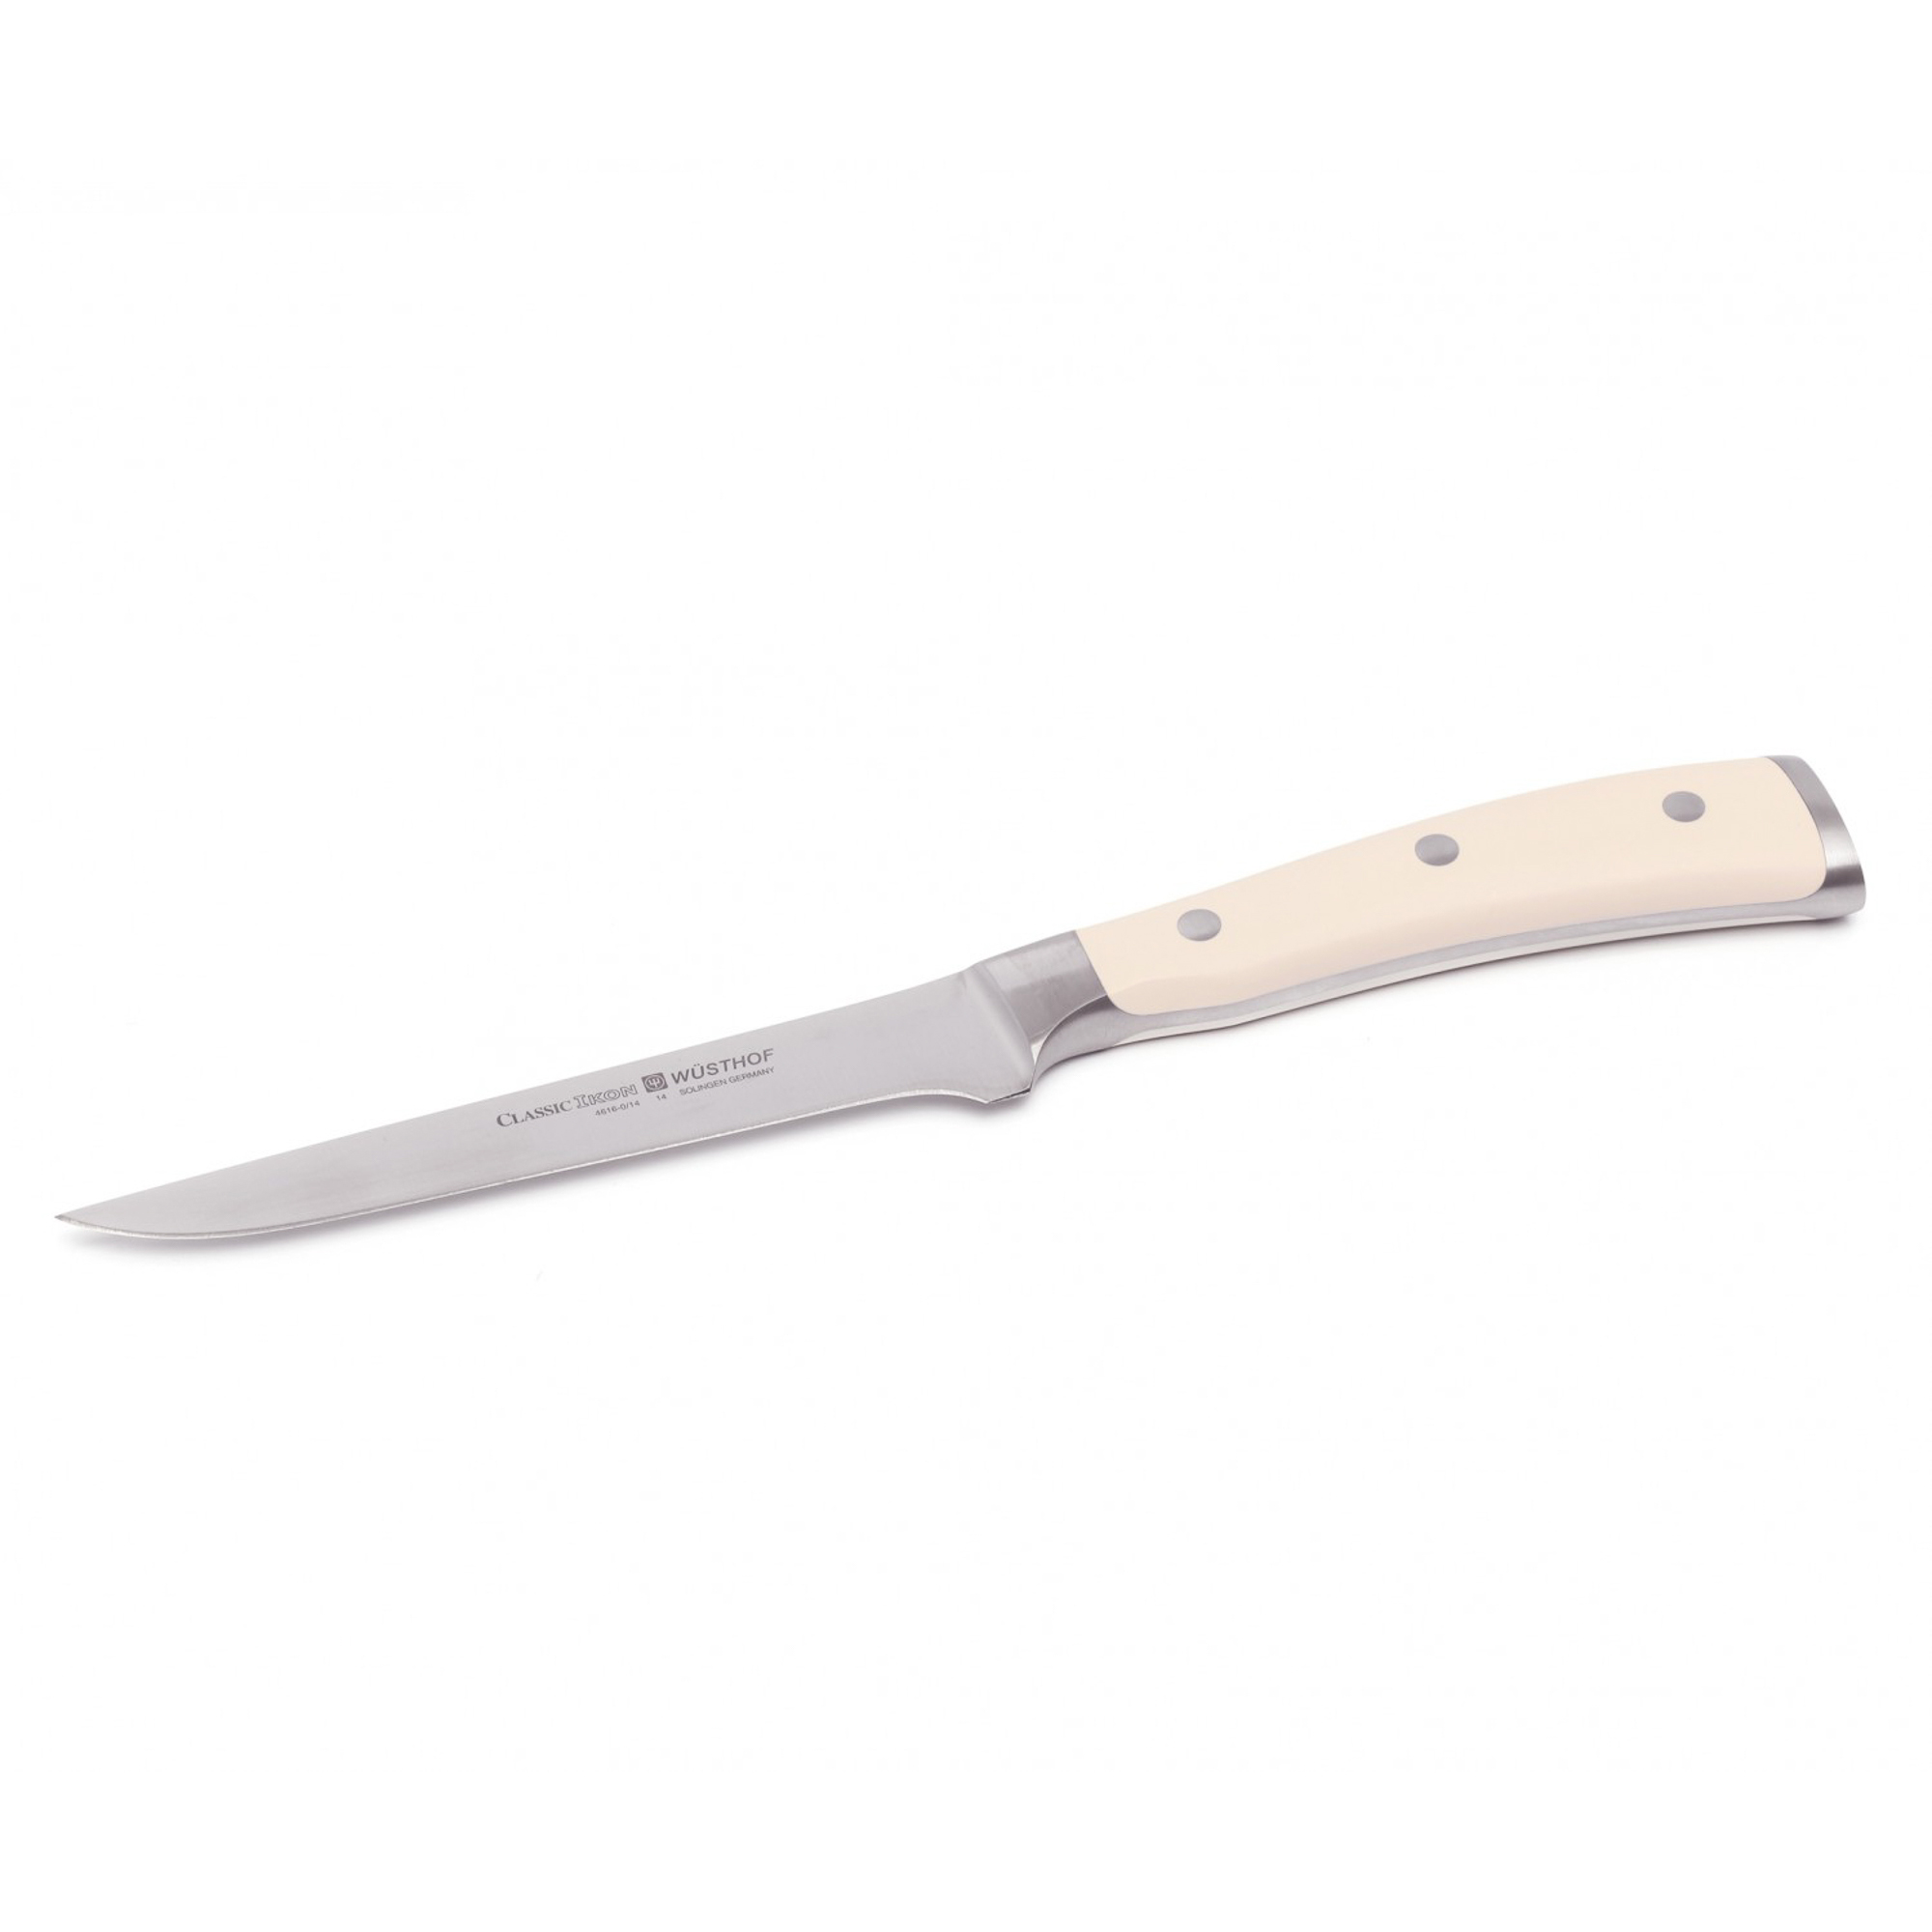 Нож обвалочный 14 см Wusthoff - фото 1